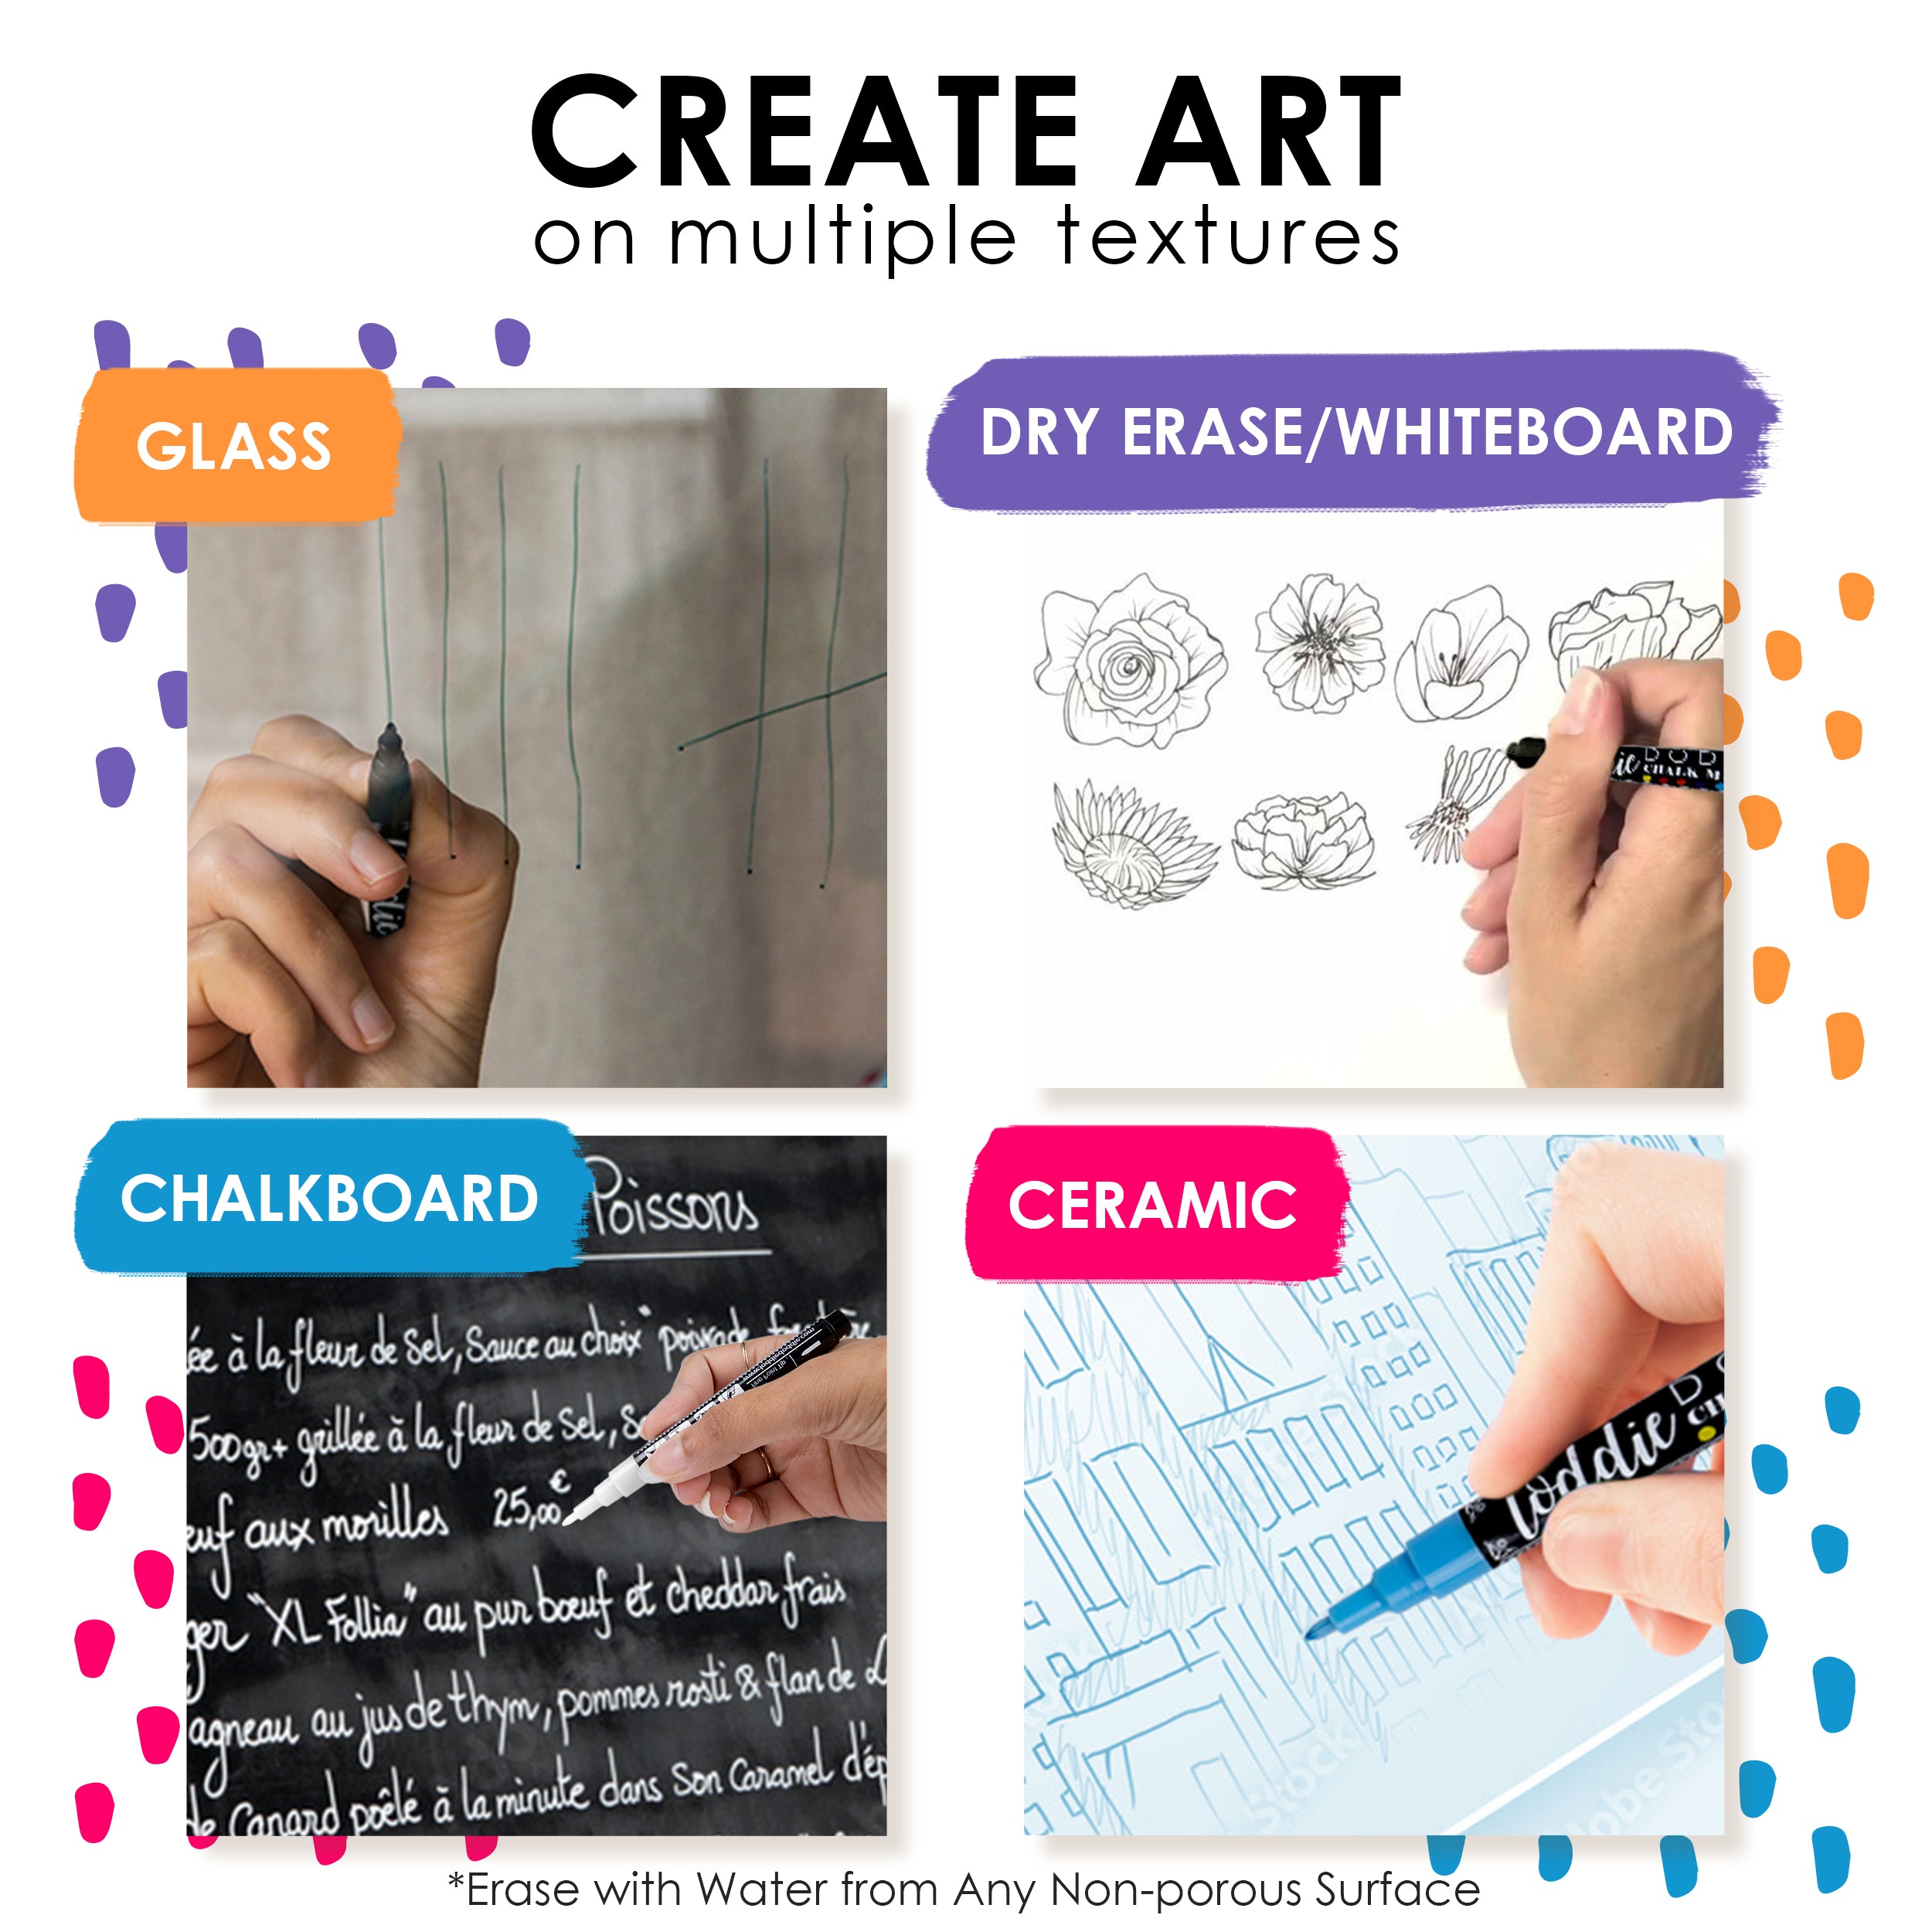 Erasable Chalk Markers  8 Ct. Vivid Colors - LoddieDoddie